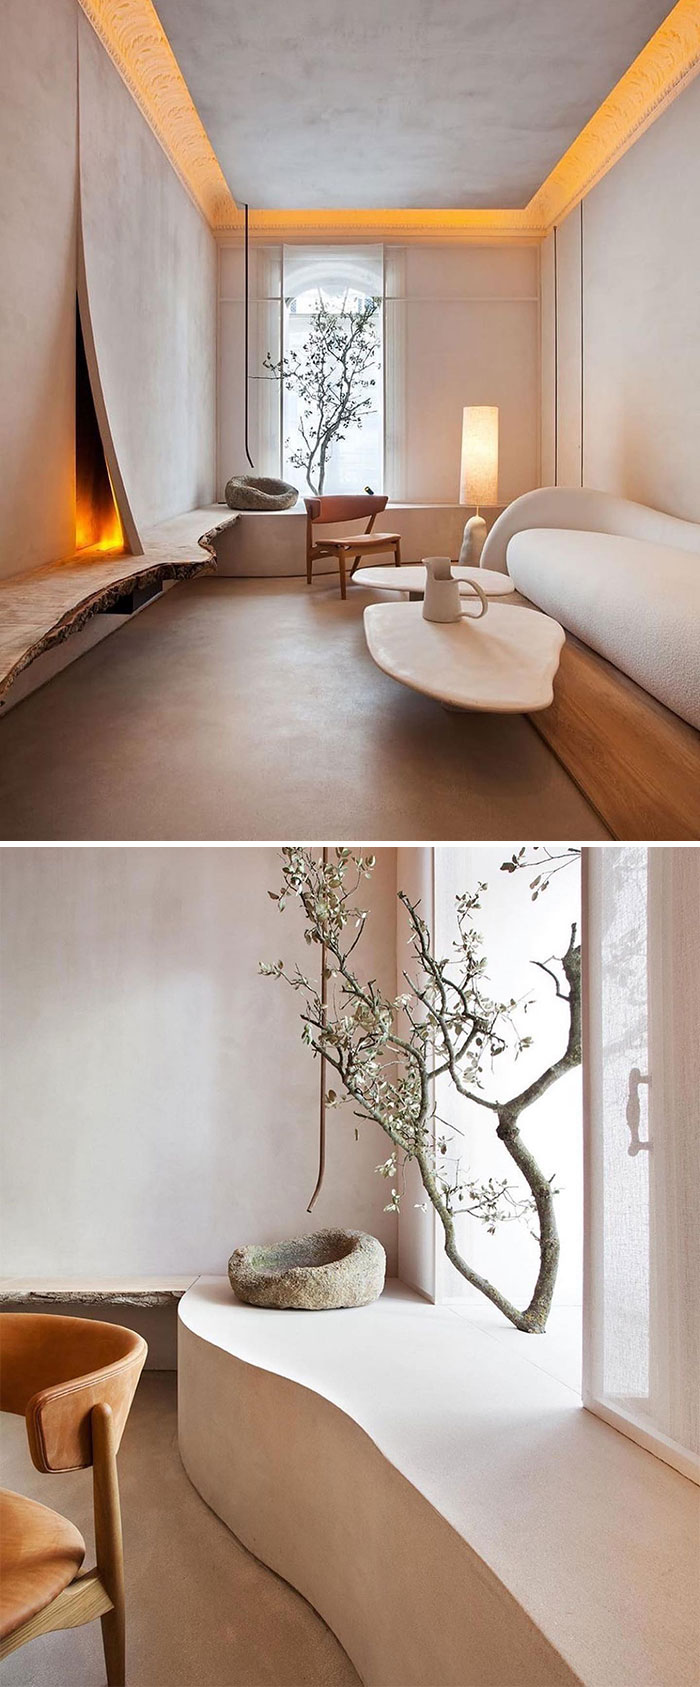 Stunning Interior Design By Lorna-De-Santos